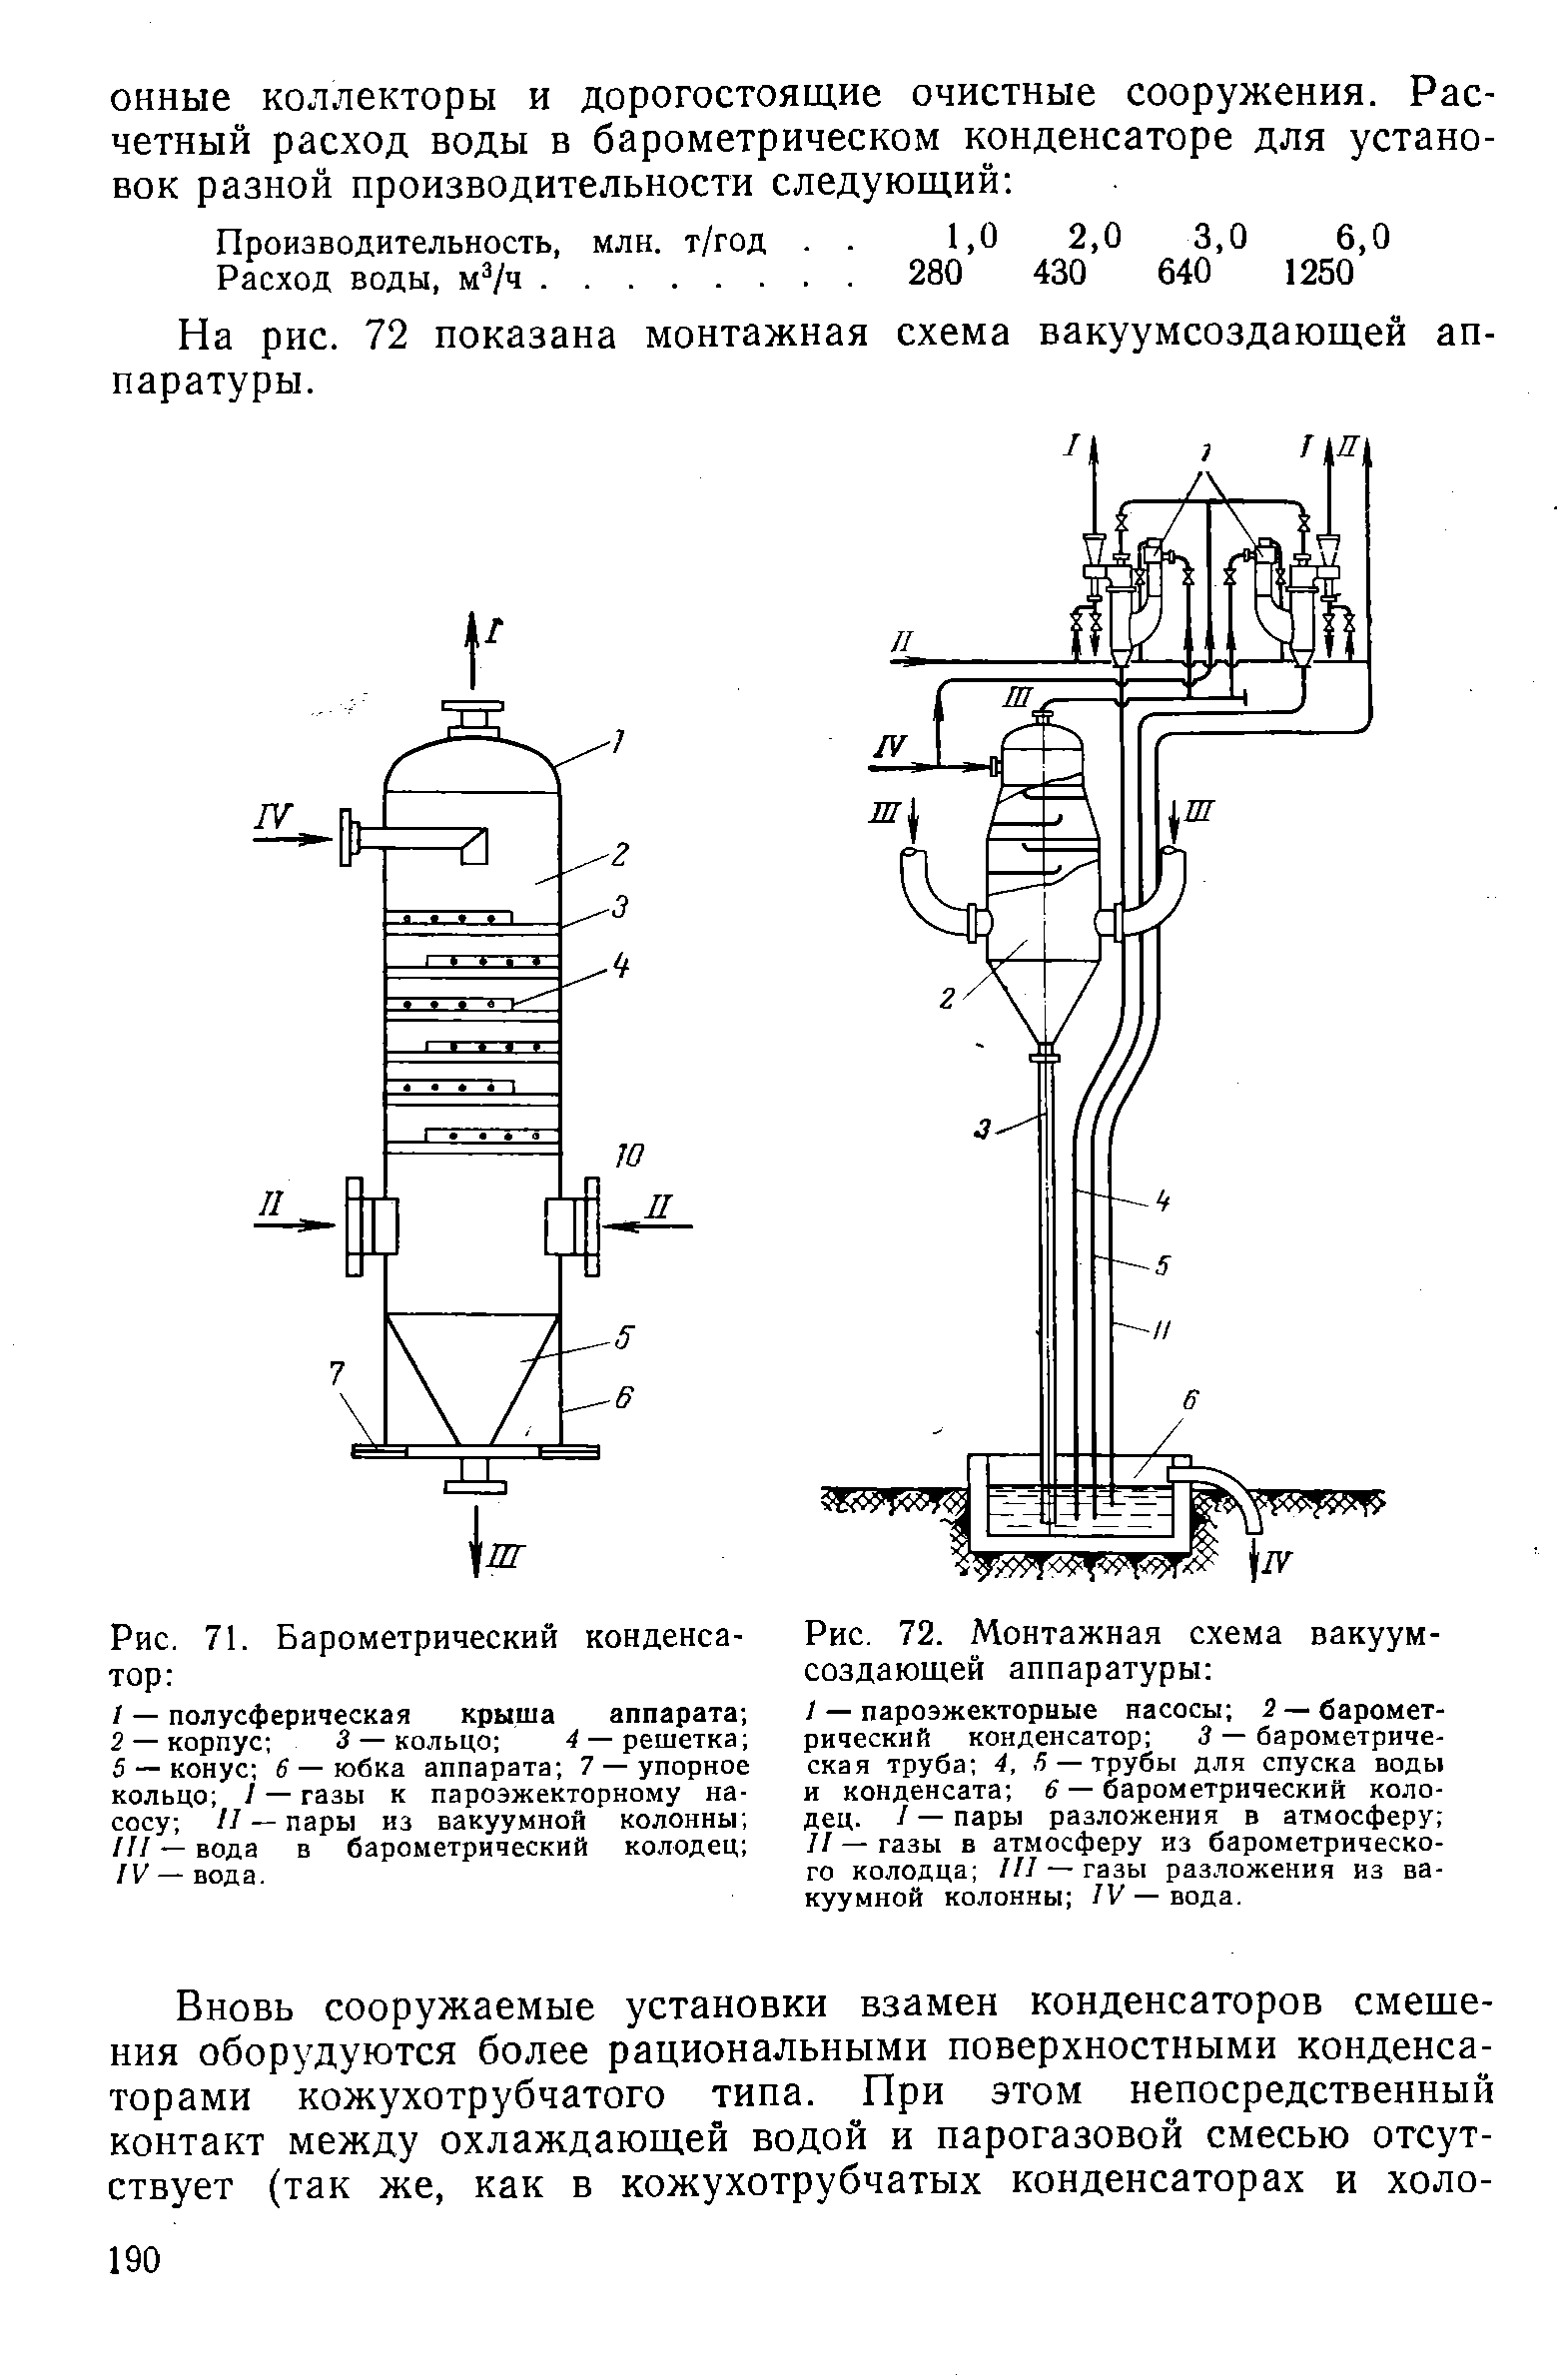 На рис. 72 показана монтажная схема вакуумсоздающей аппаратуры.